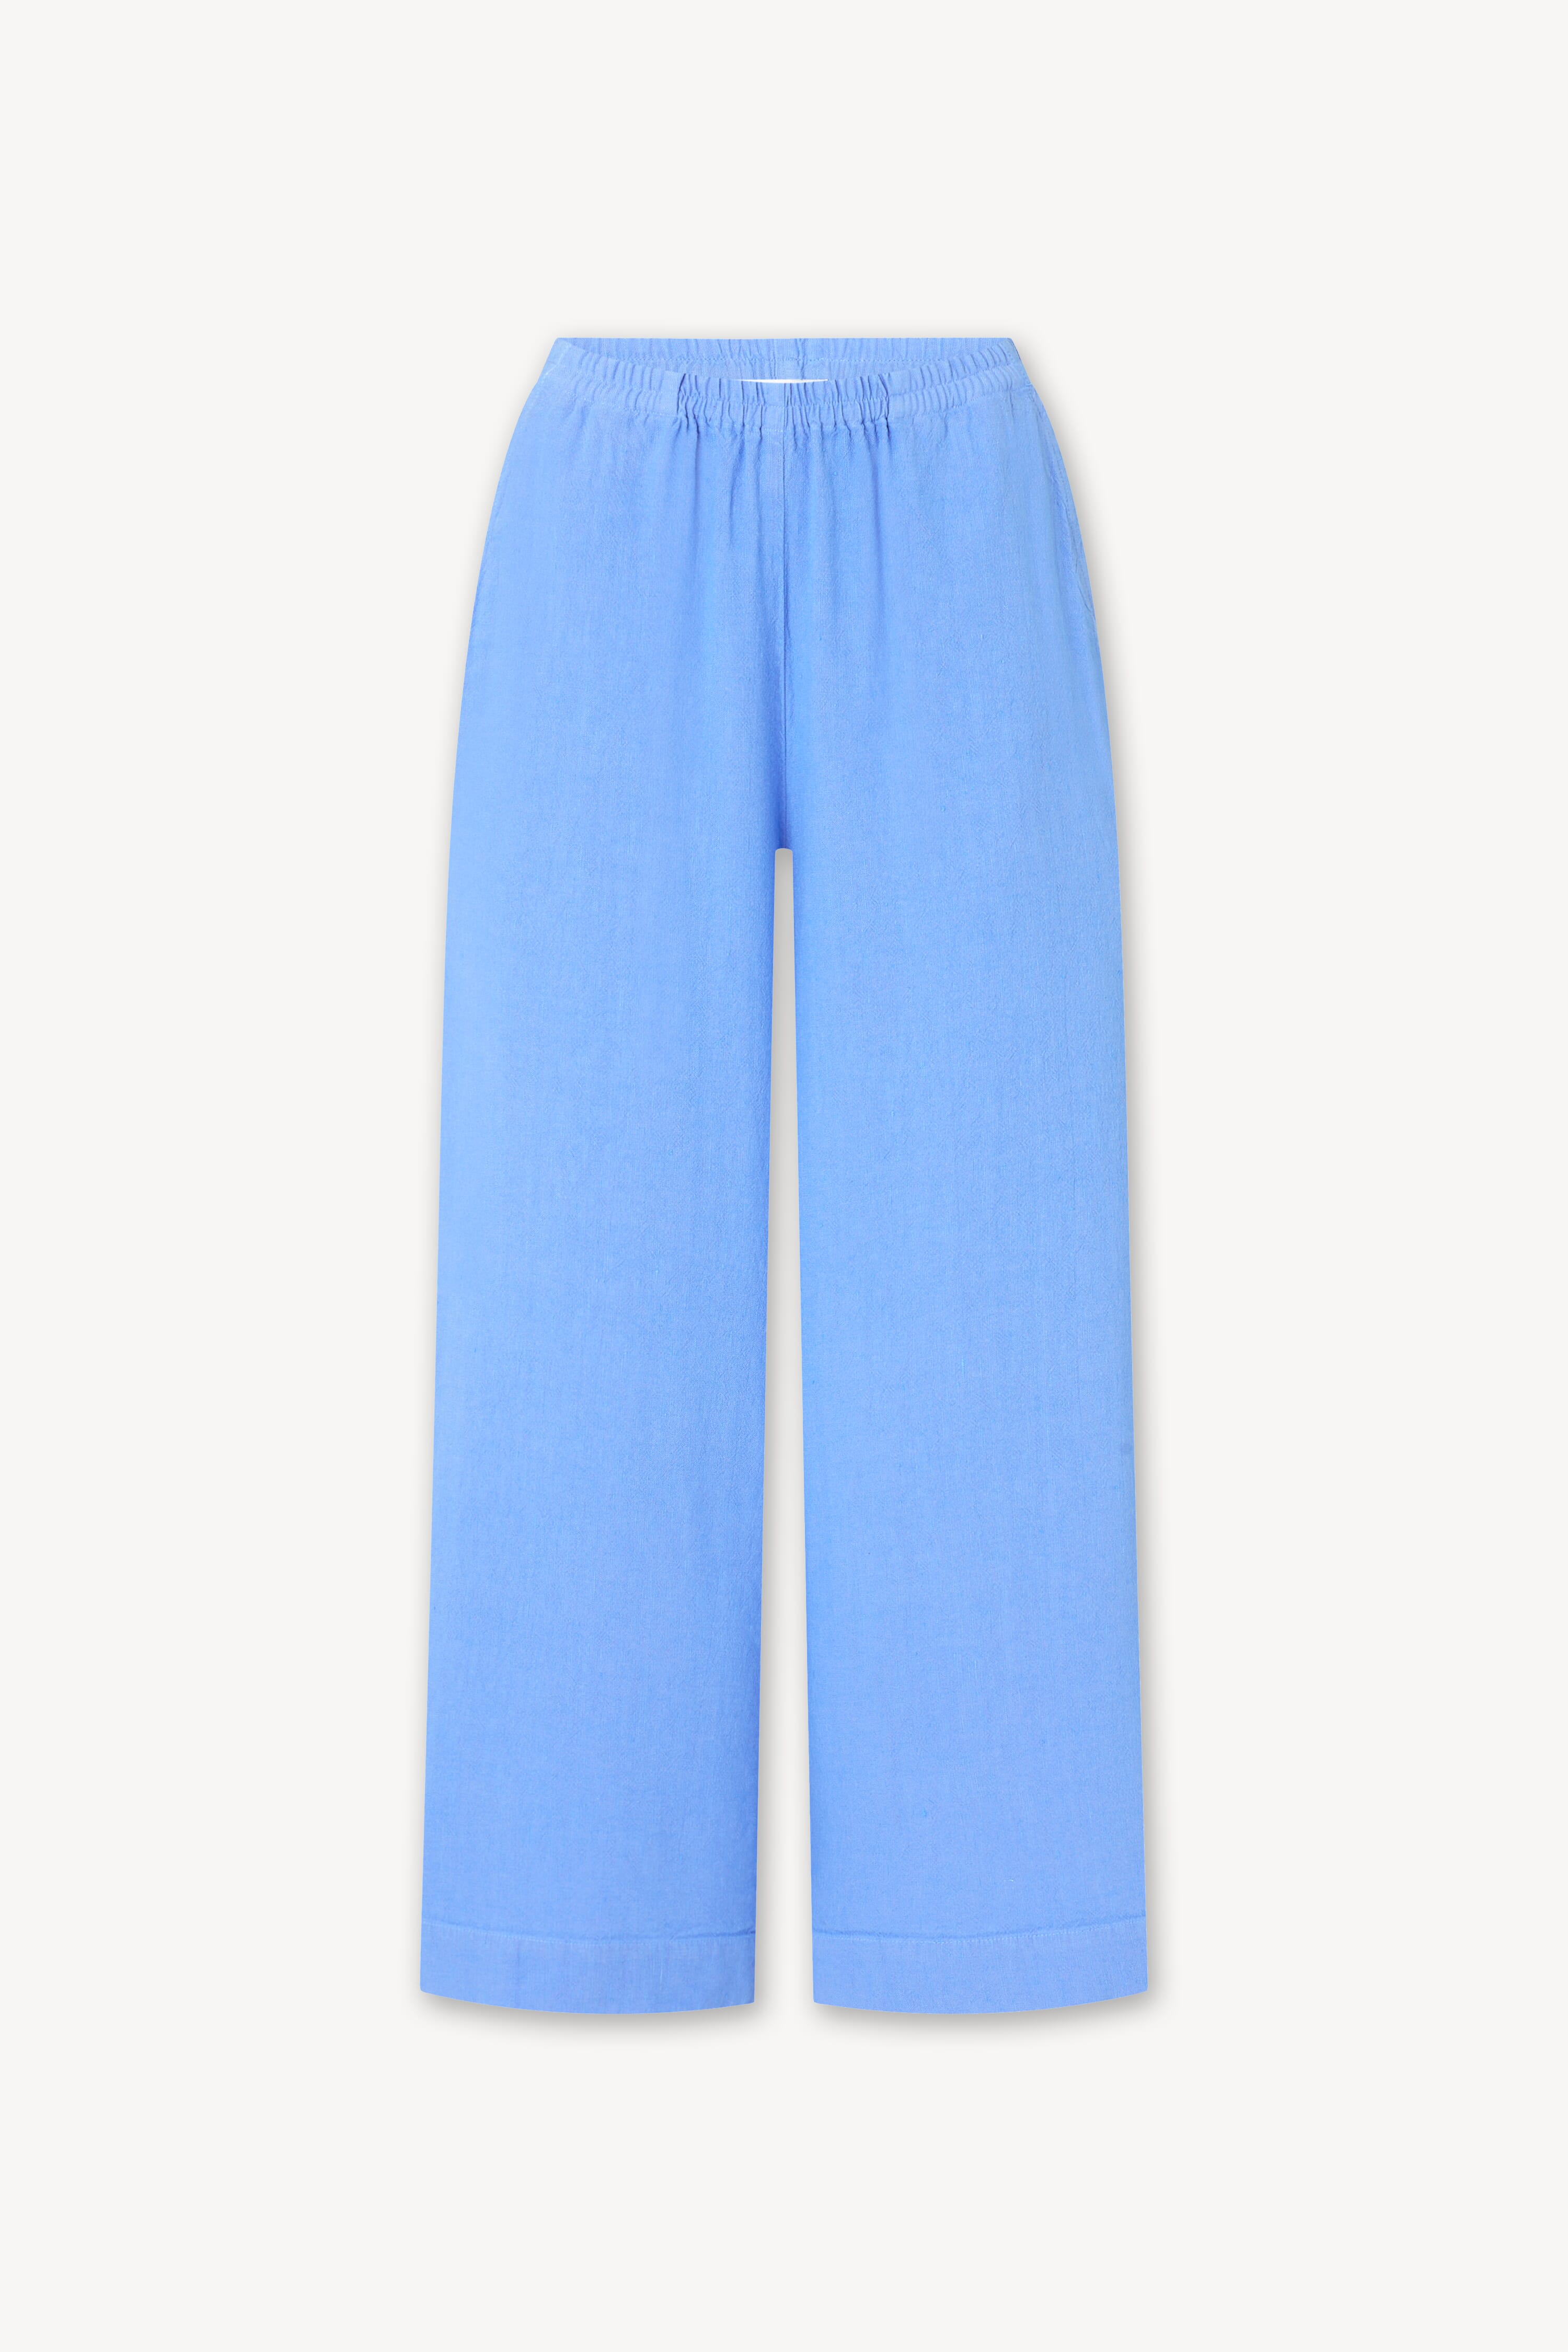 Solid Blue Trouser - LASTINCH